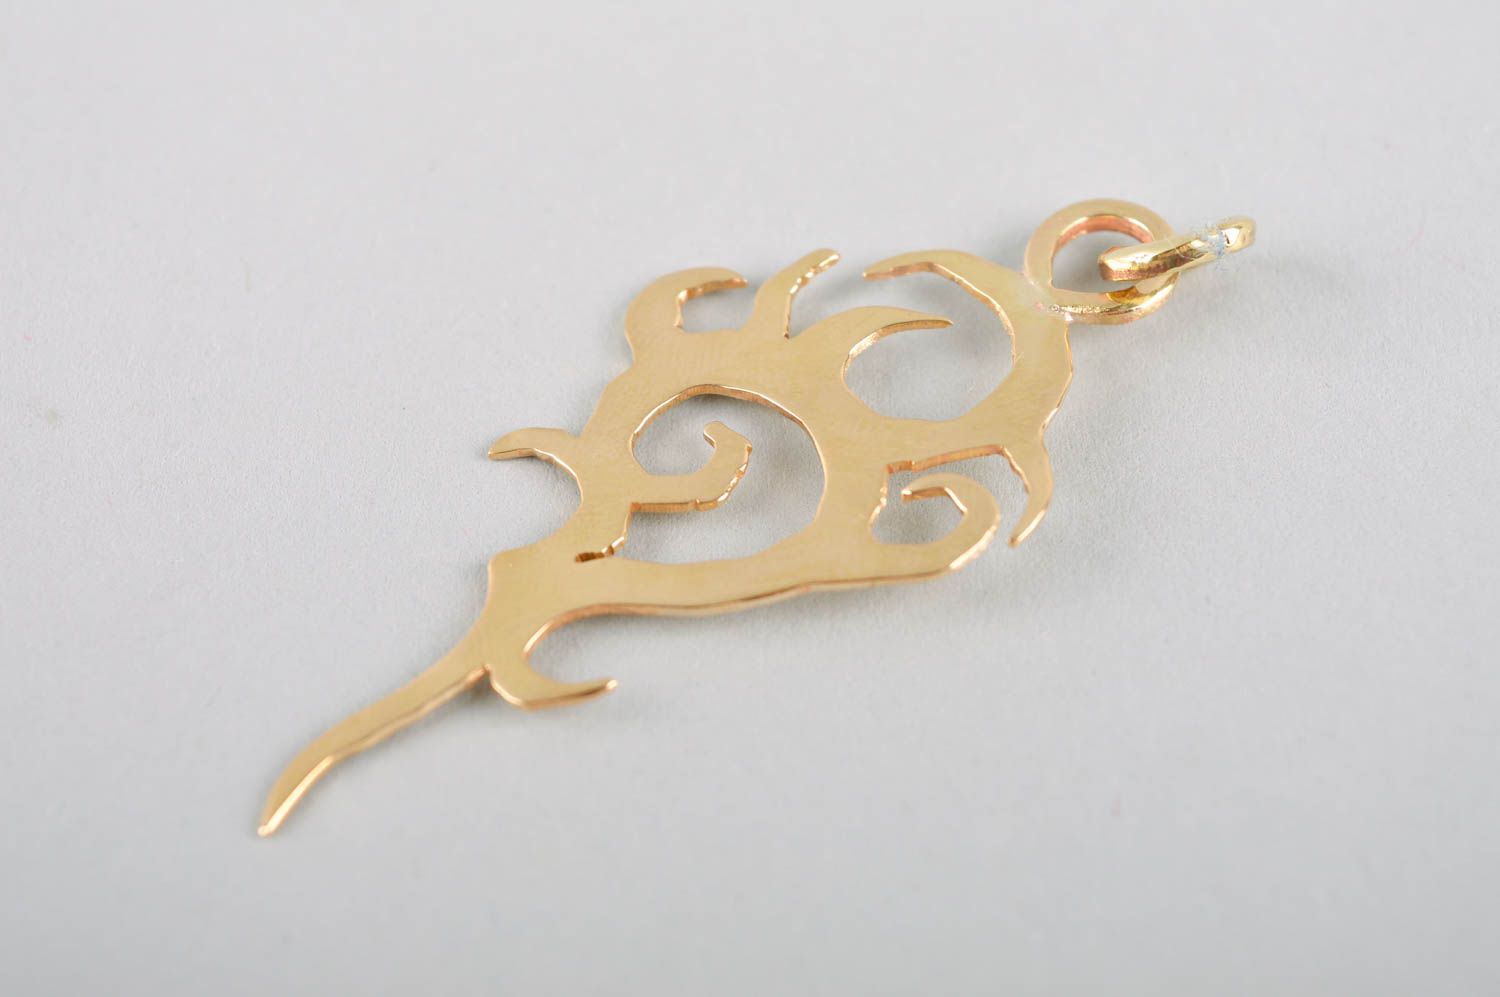 Stylish handmade metal pendant artisan jewelry designs beautiful jewellery photo 3